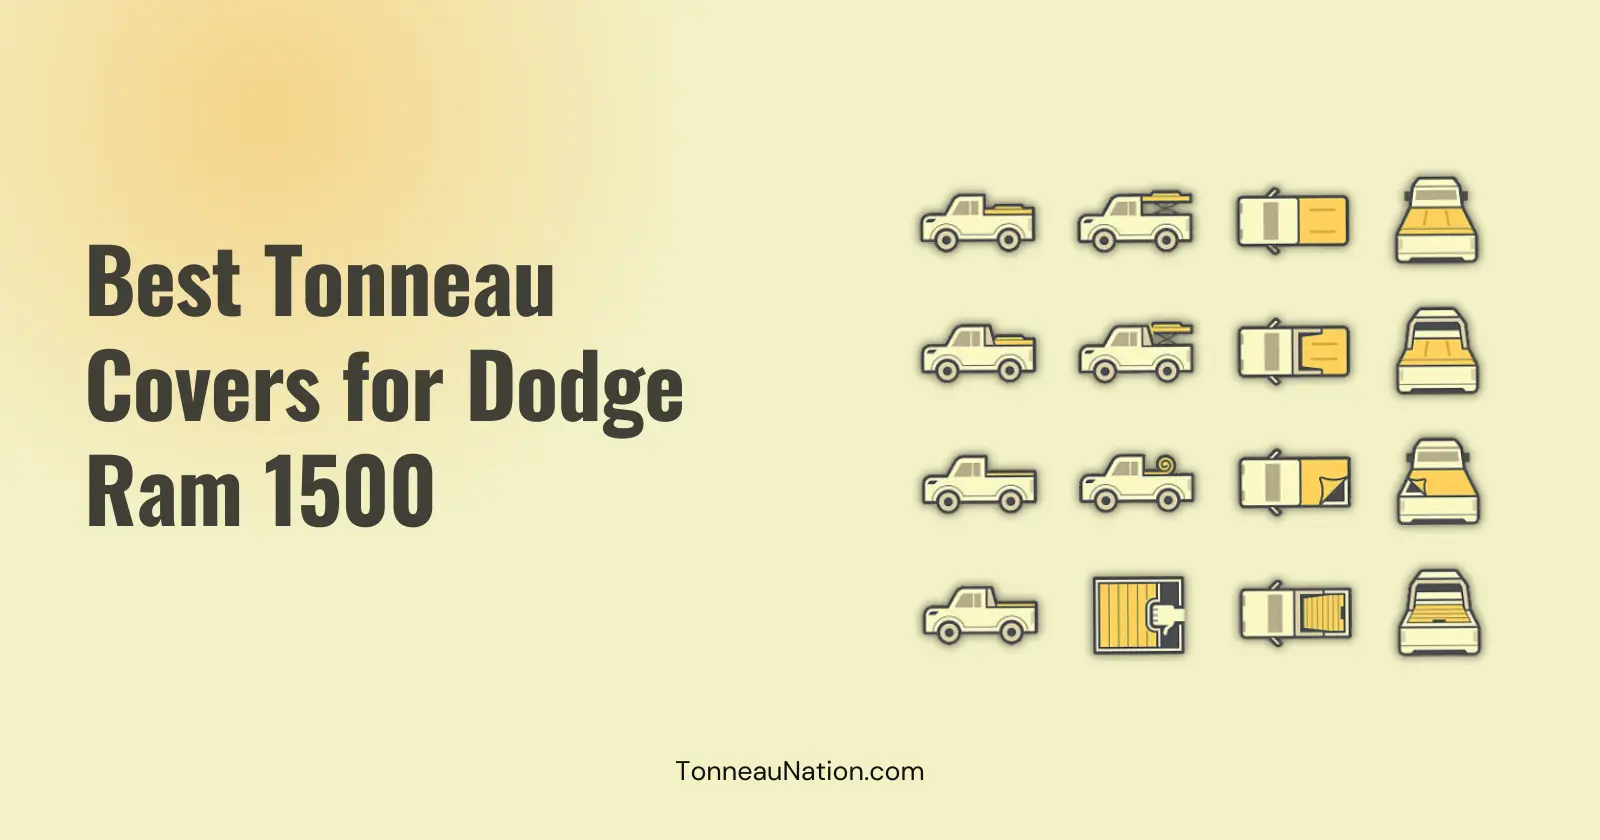 Tonneau cover for Dodge Ram 1500